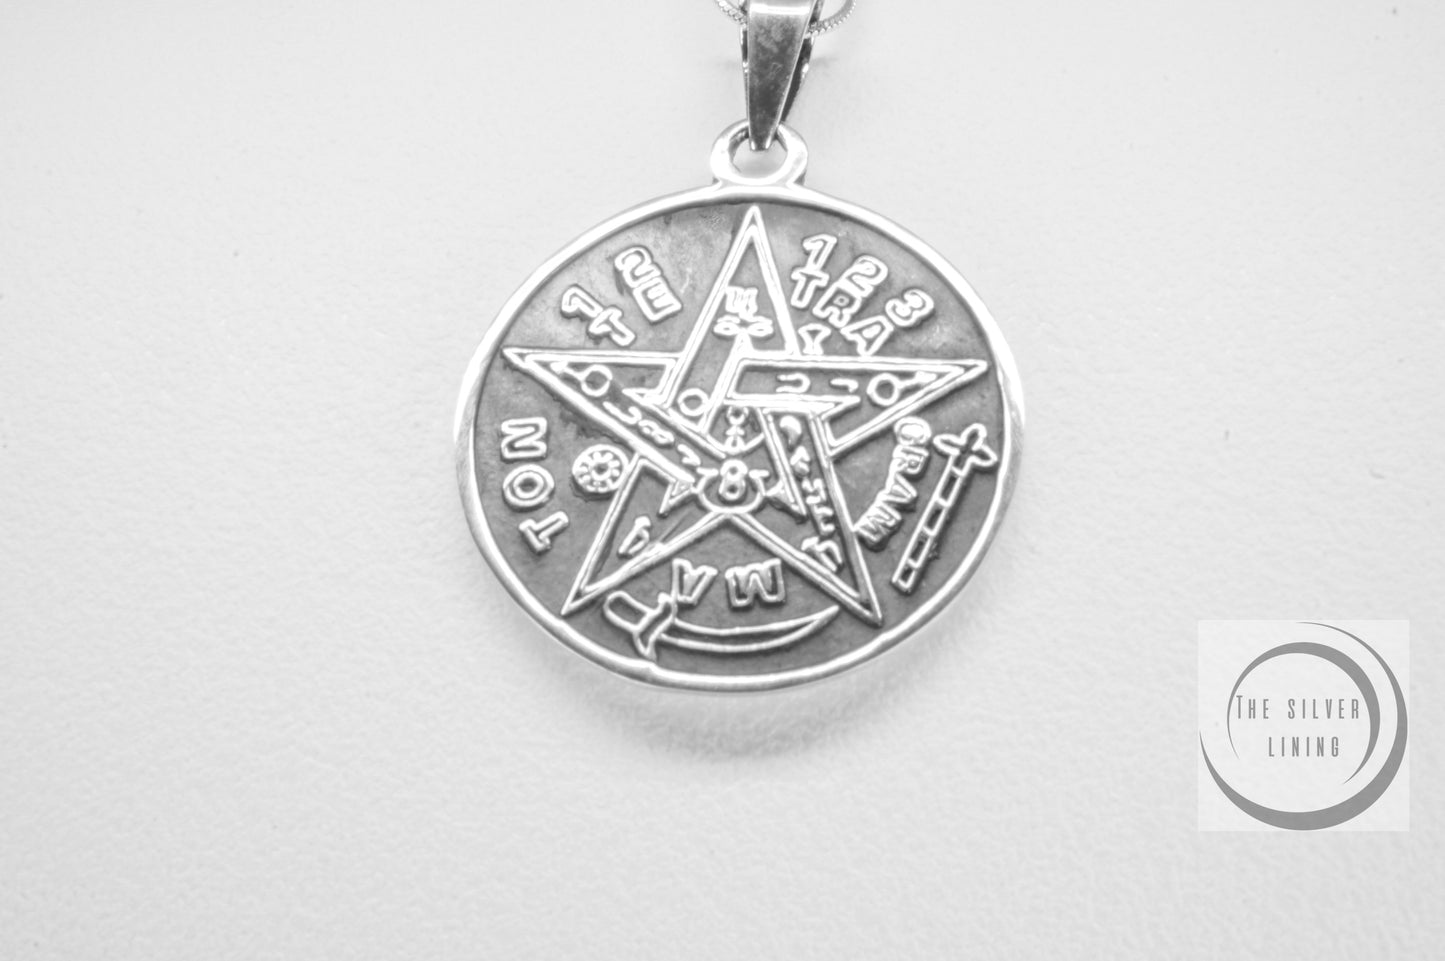 Dije de plata 925, Amuleto Tetragramatron con cadena incluída